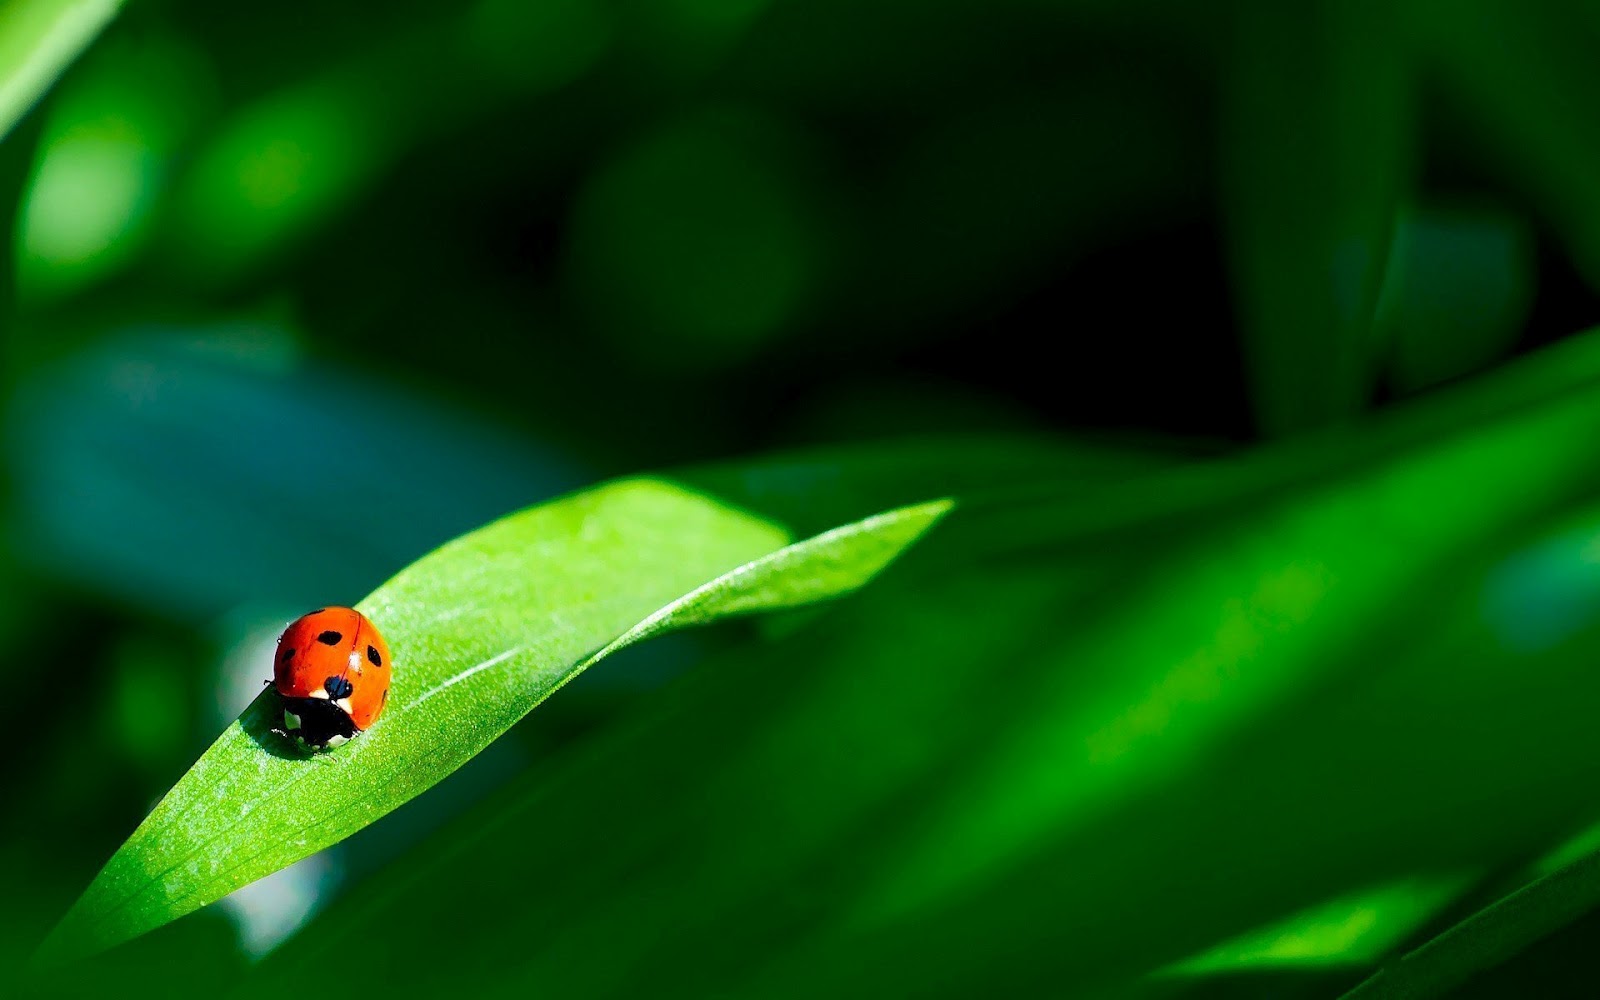 hd ladybug wallpaper with a ladybug walking on a green leaf ladybugs